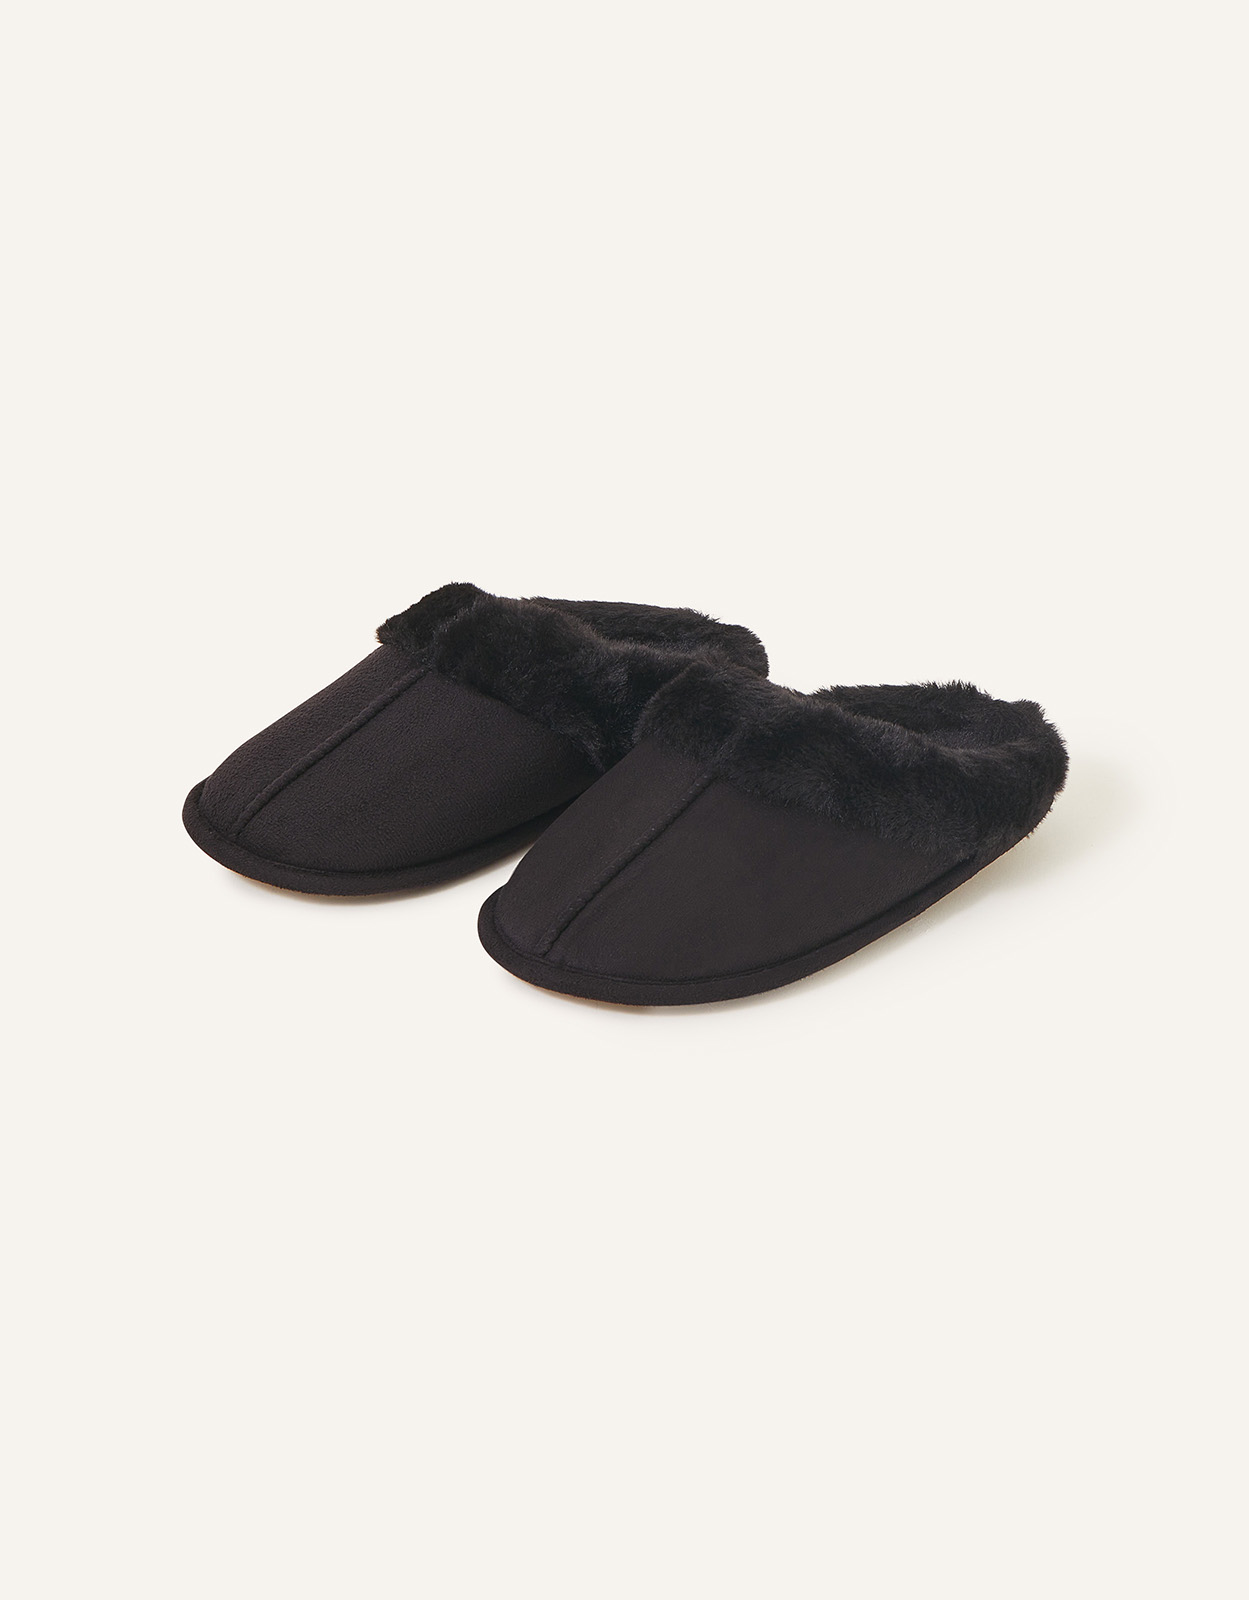 Accessorize Women's Faux Fur Mule Slippers Black, Size: M